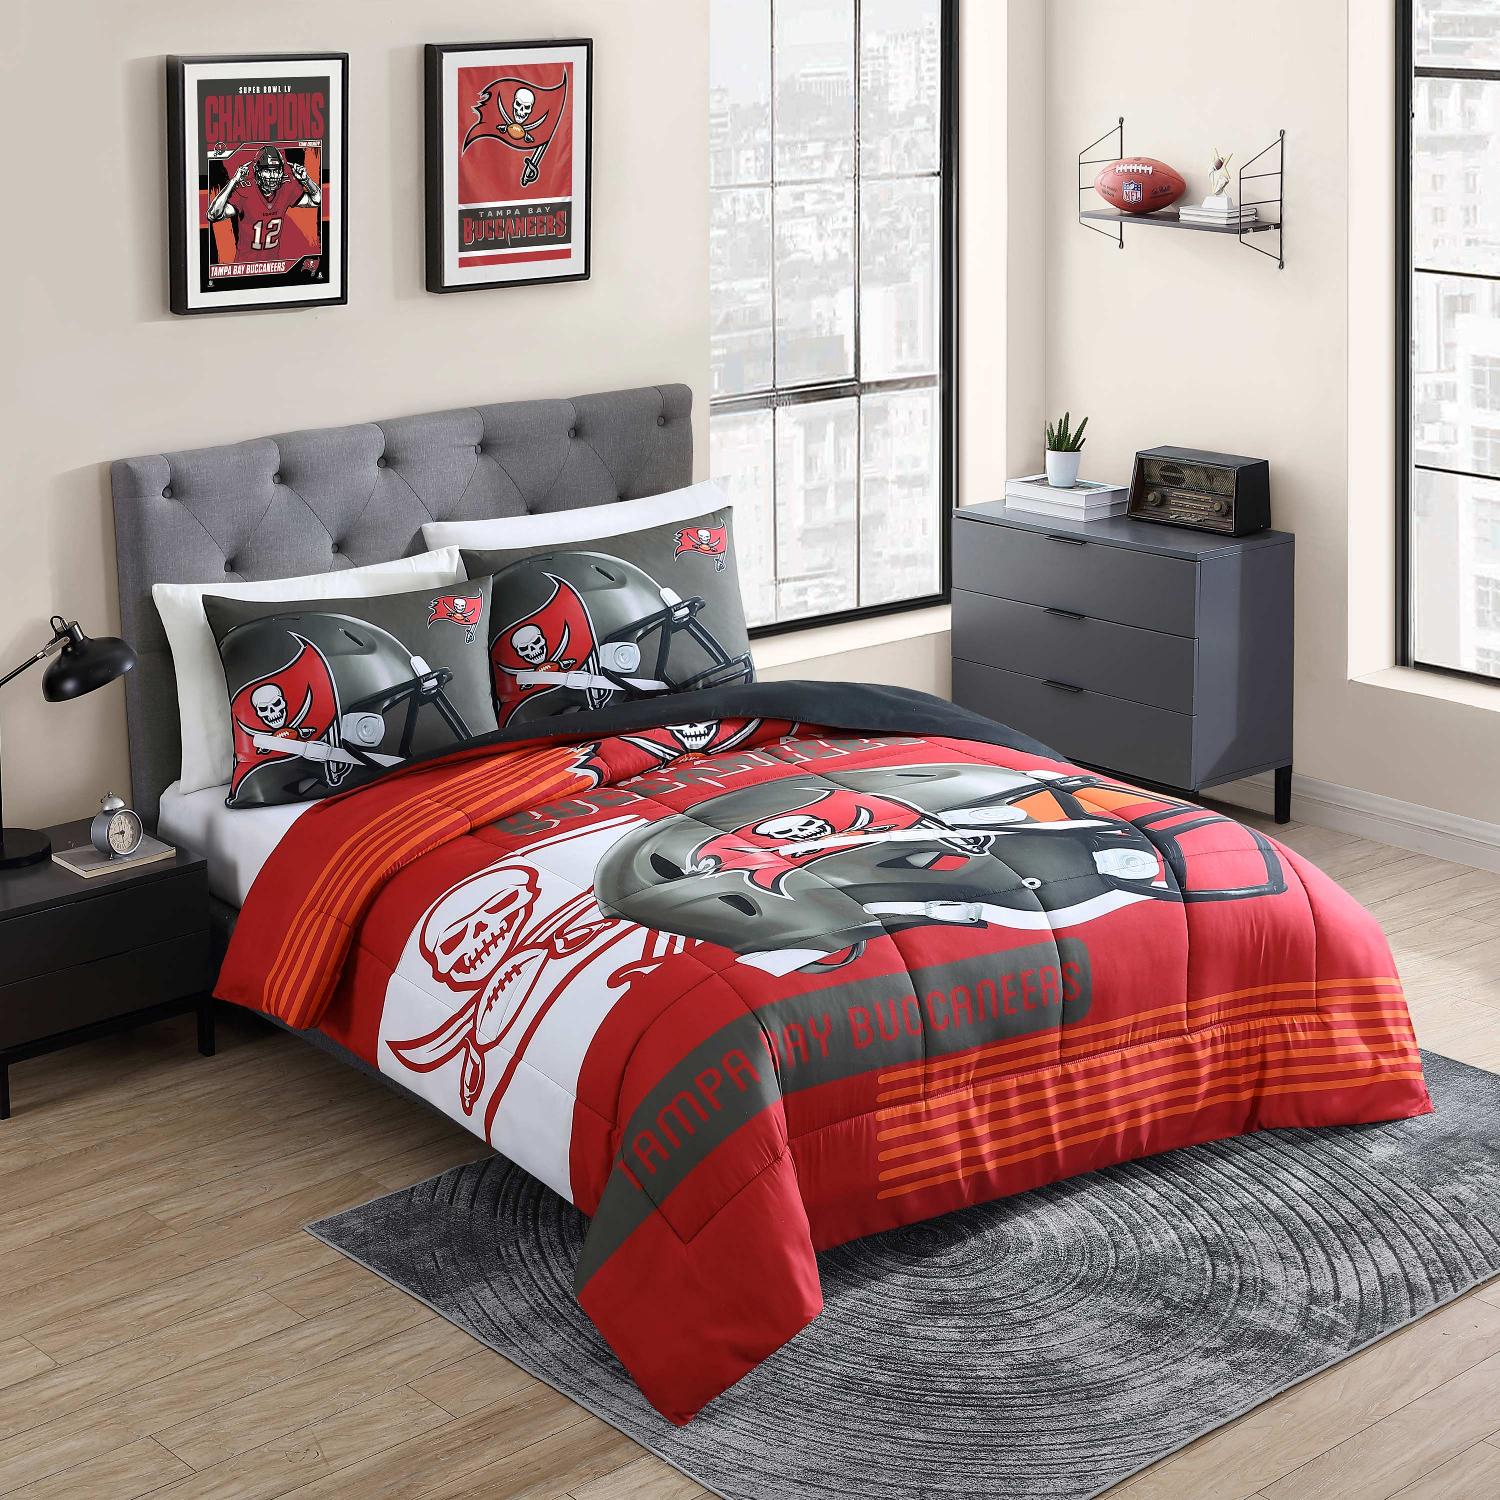 Tampa Bay Buccaneers NFL Officially Licensed 3-Piece Comforter Set - Bed